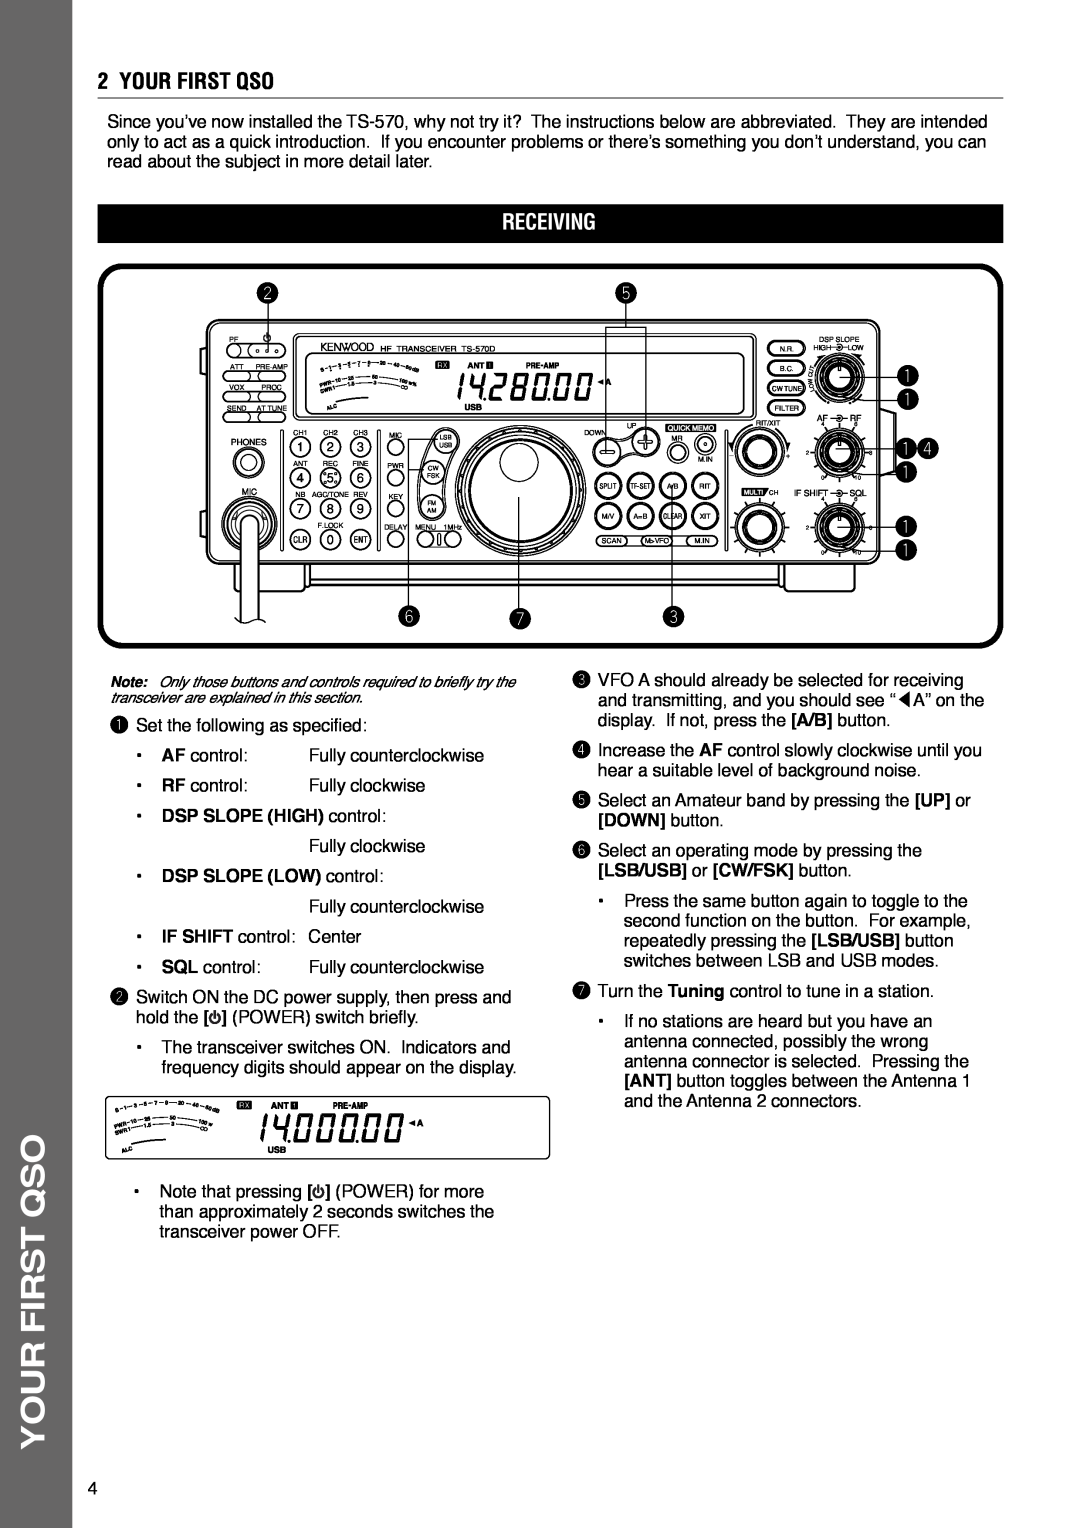 Kenwood TS-570D instruction manual Your First Qso, Receiving, q q qr q 